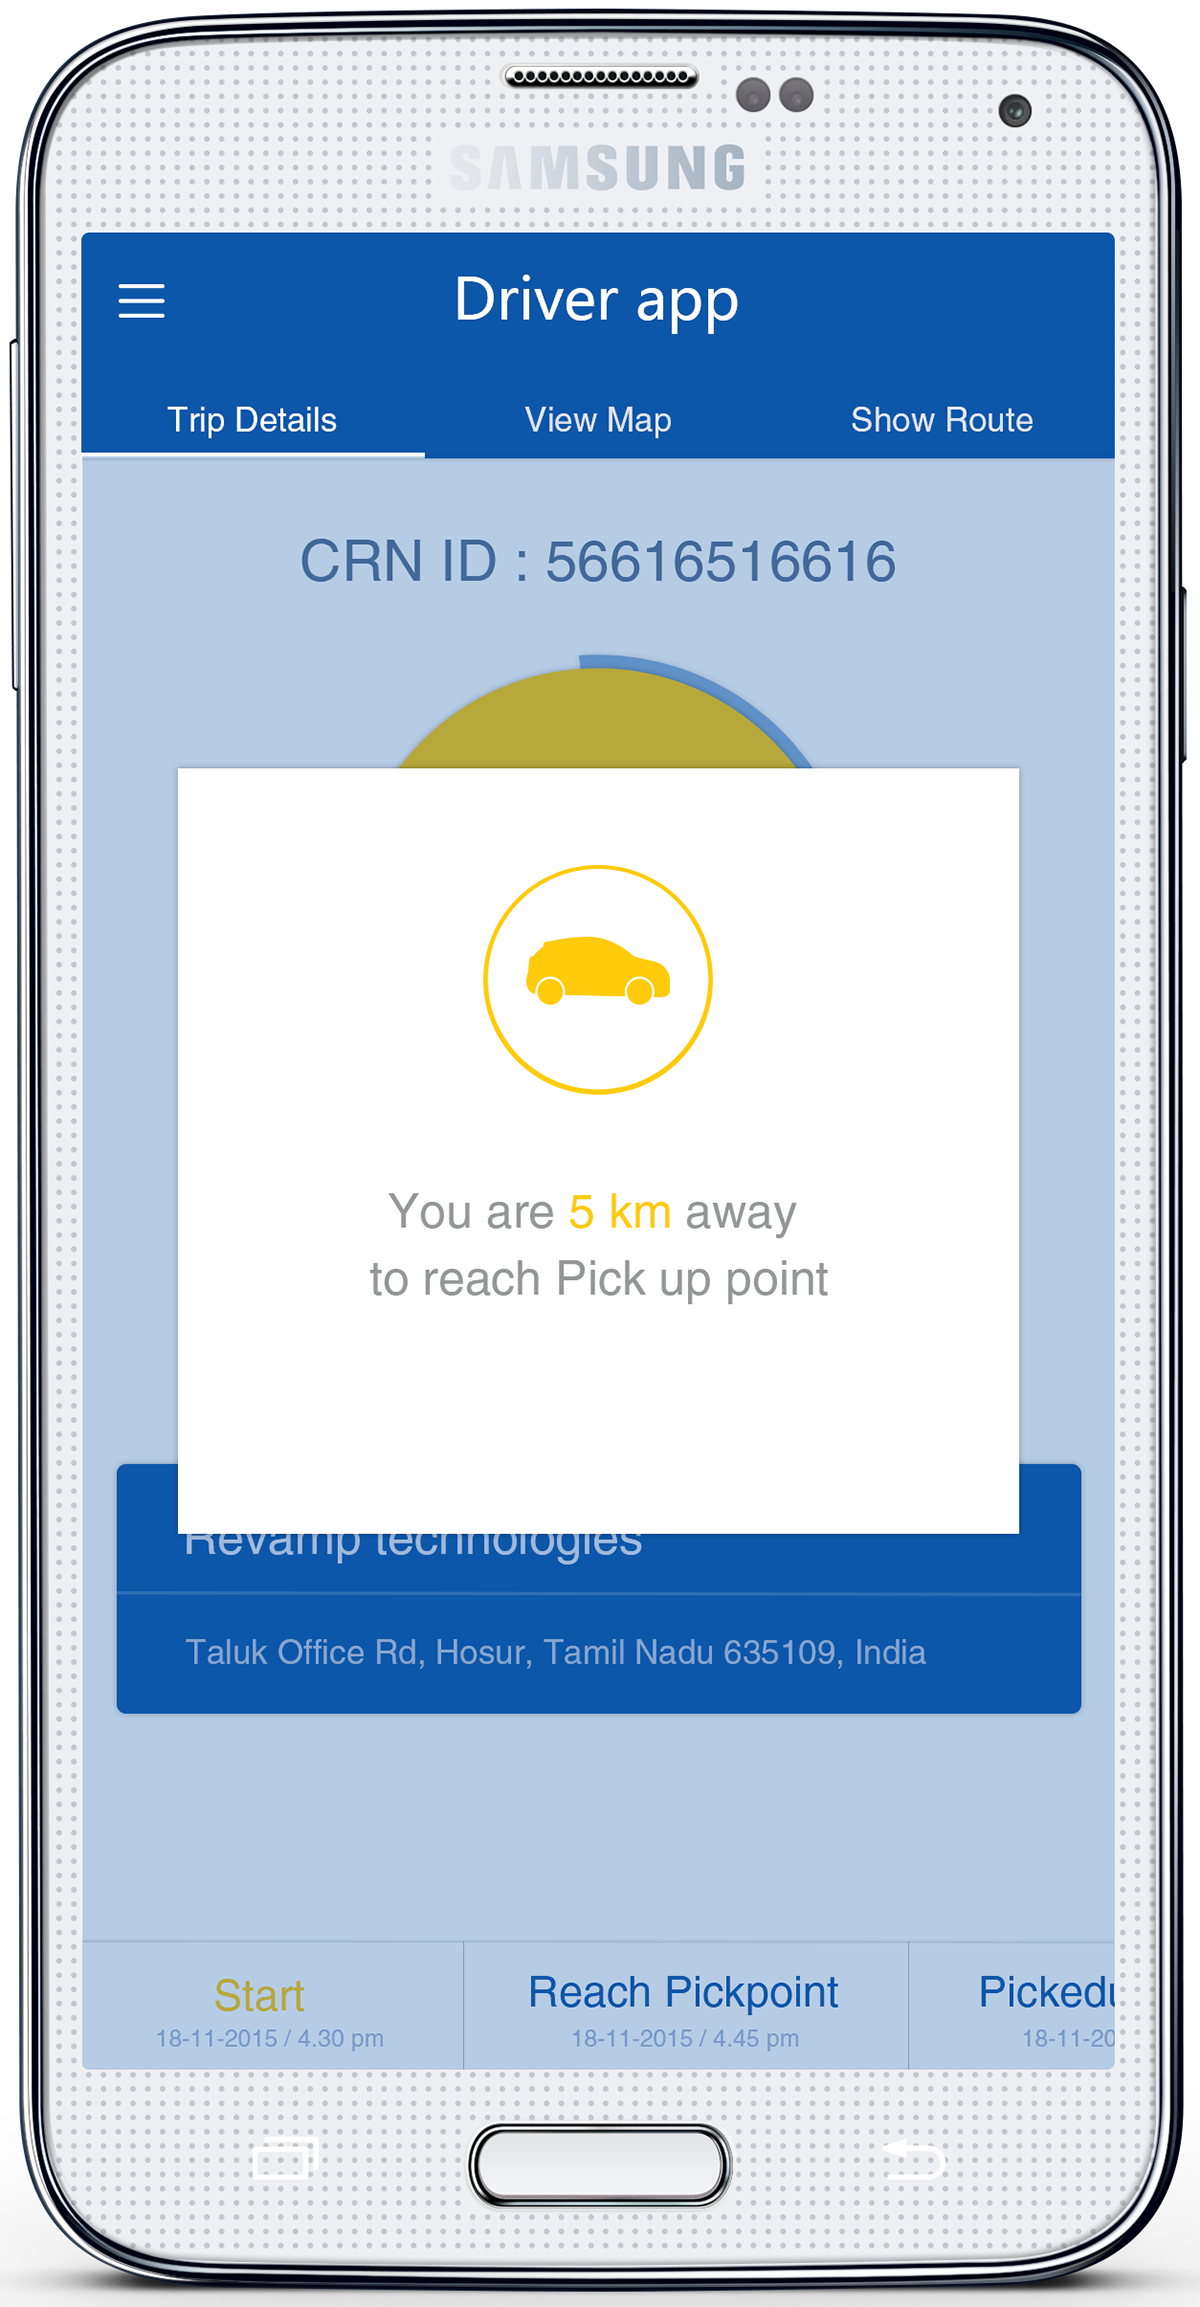 Driver app